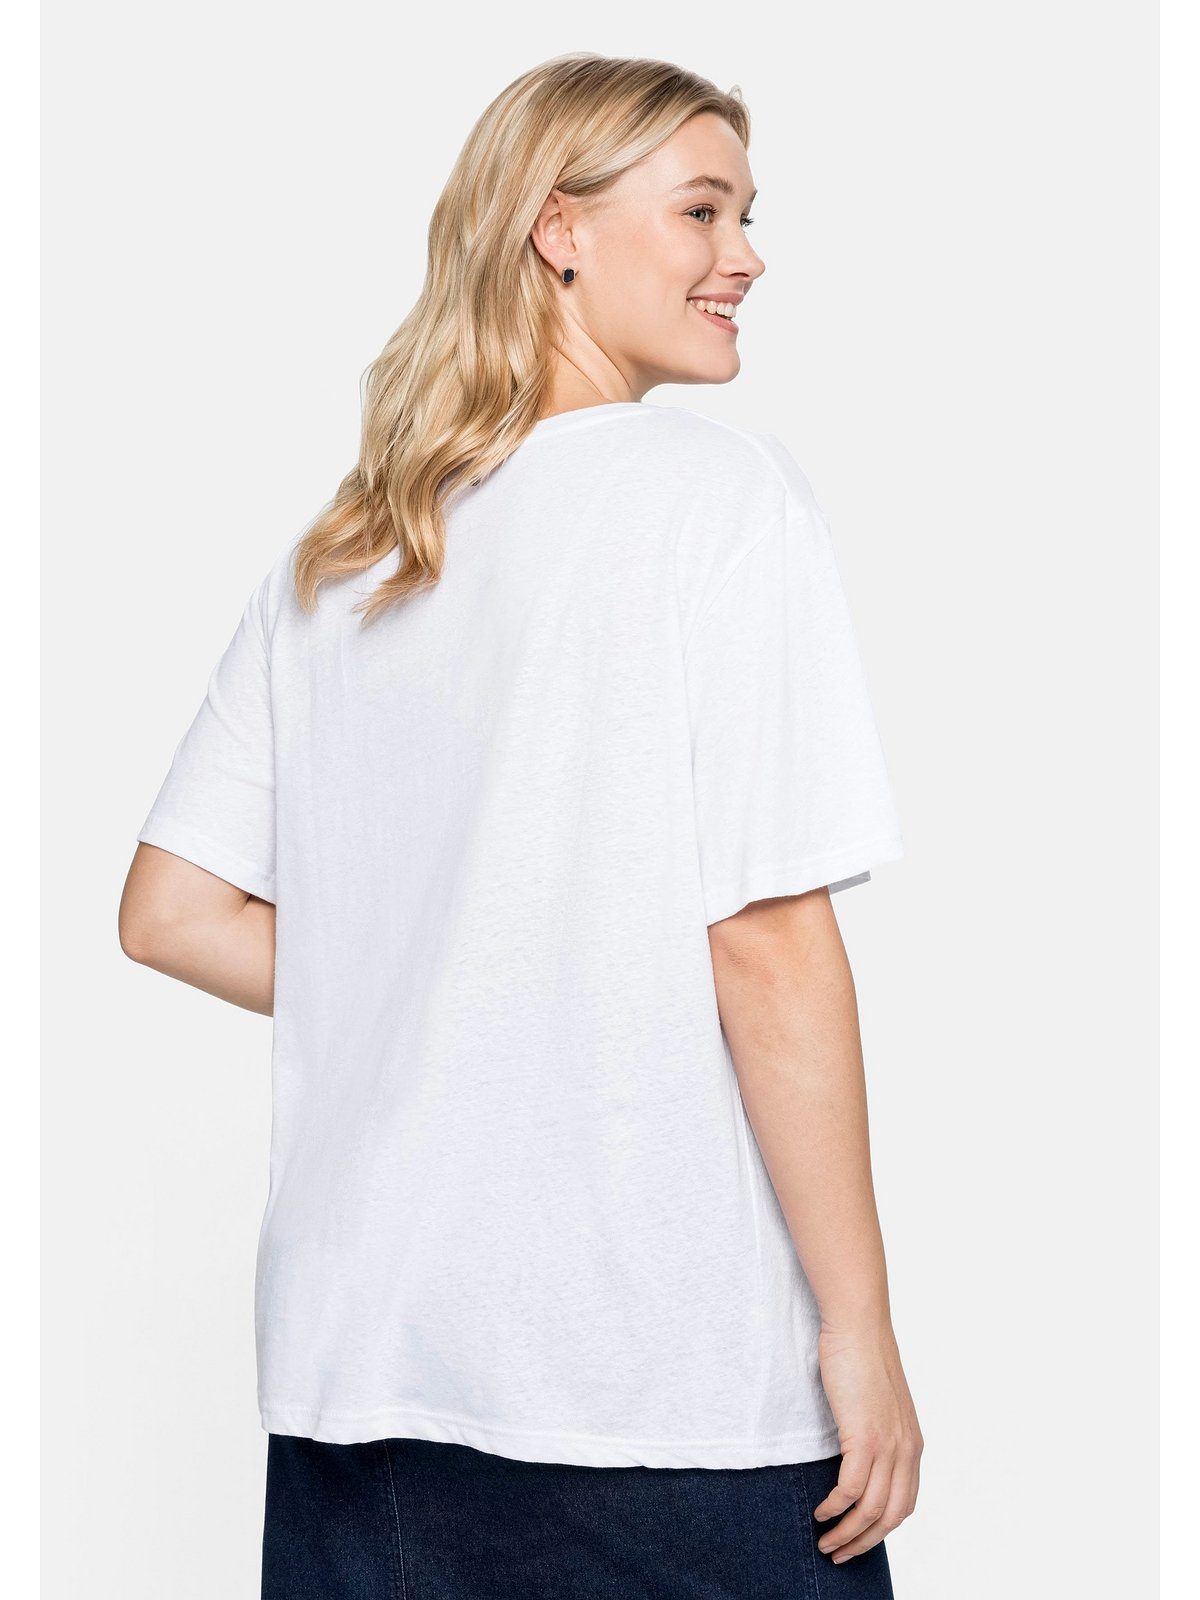 Sheego T-Shirt Große aus edlem Leinen-Viskose-Mix weiß Größen